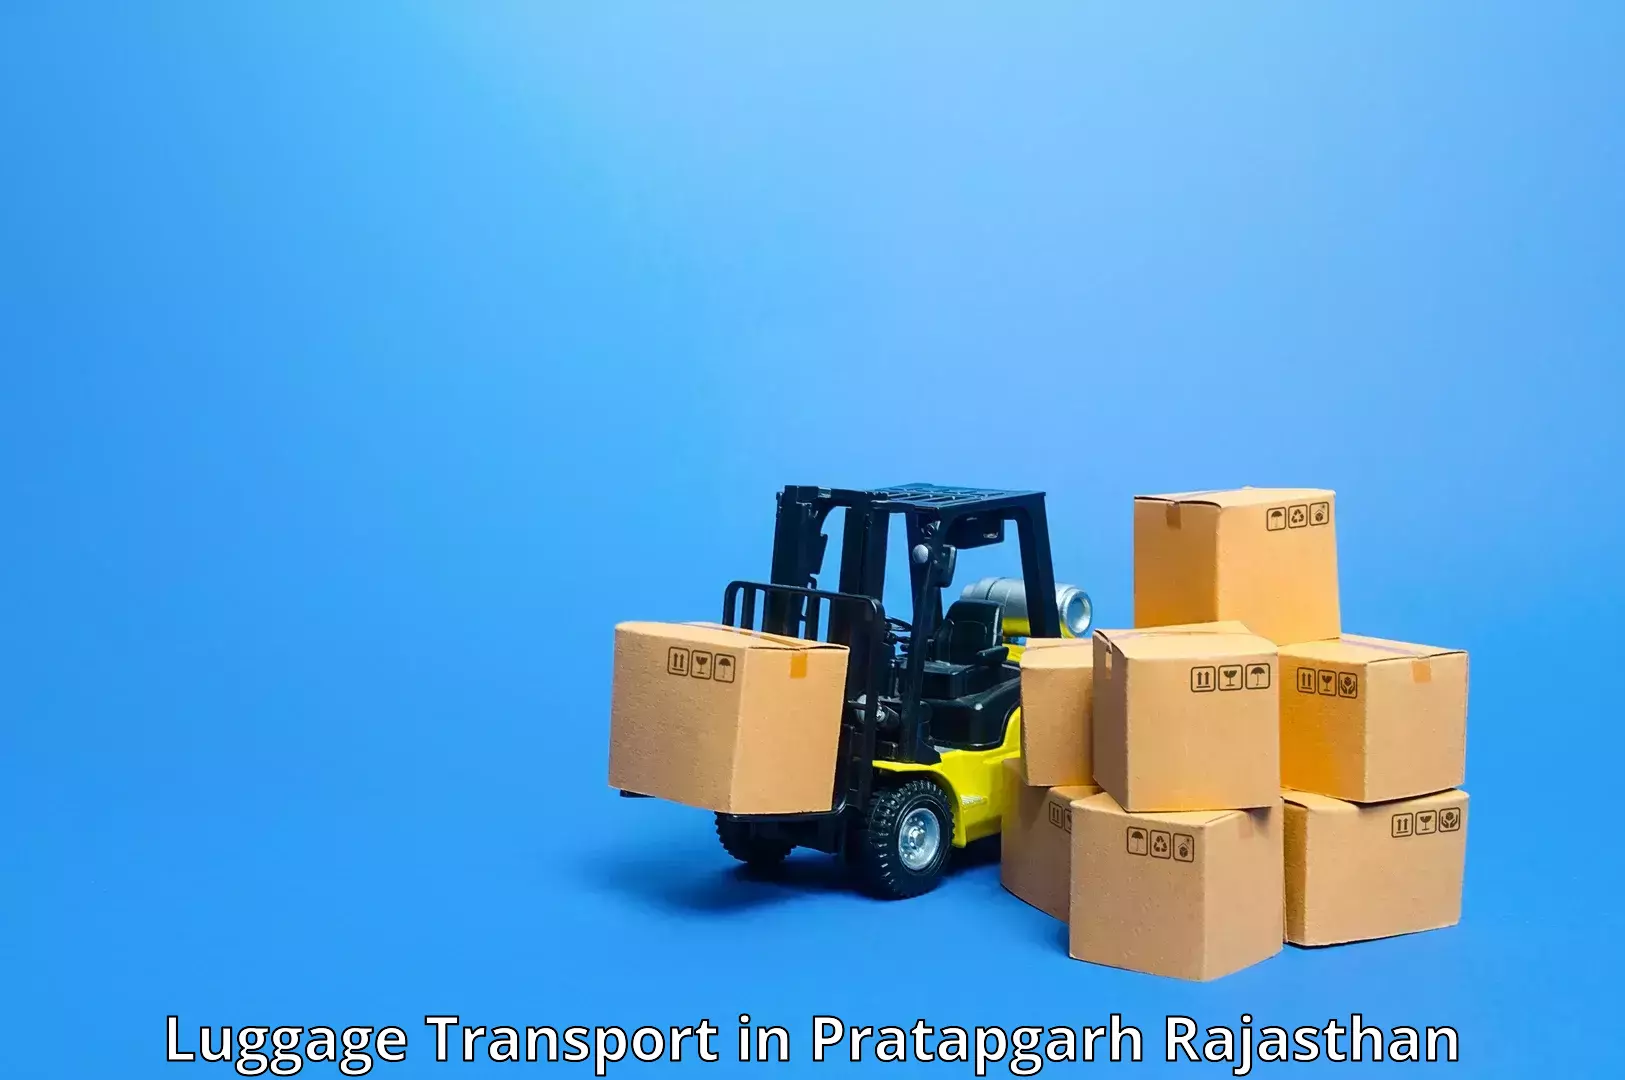 Automated luggage transport in Pratapgarh Rajasthan